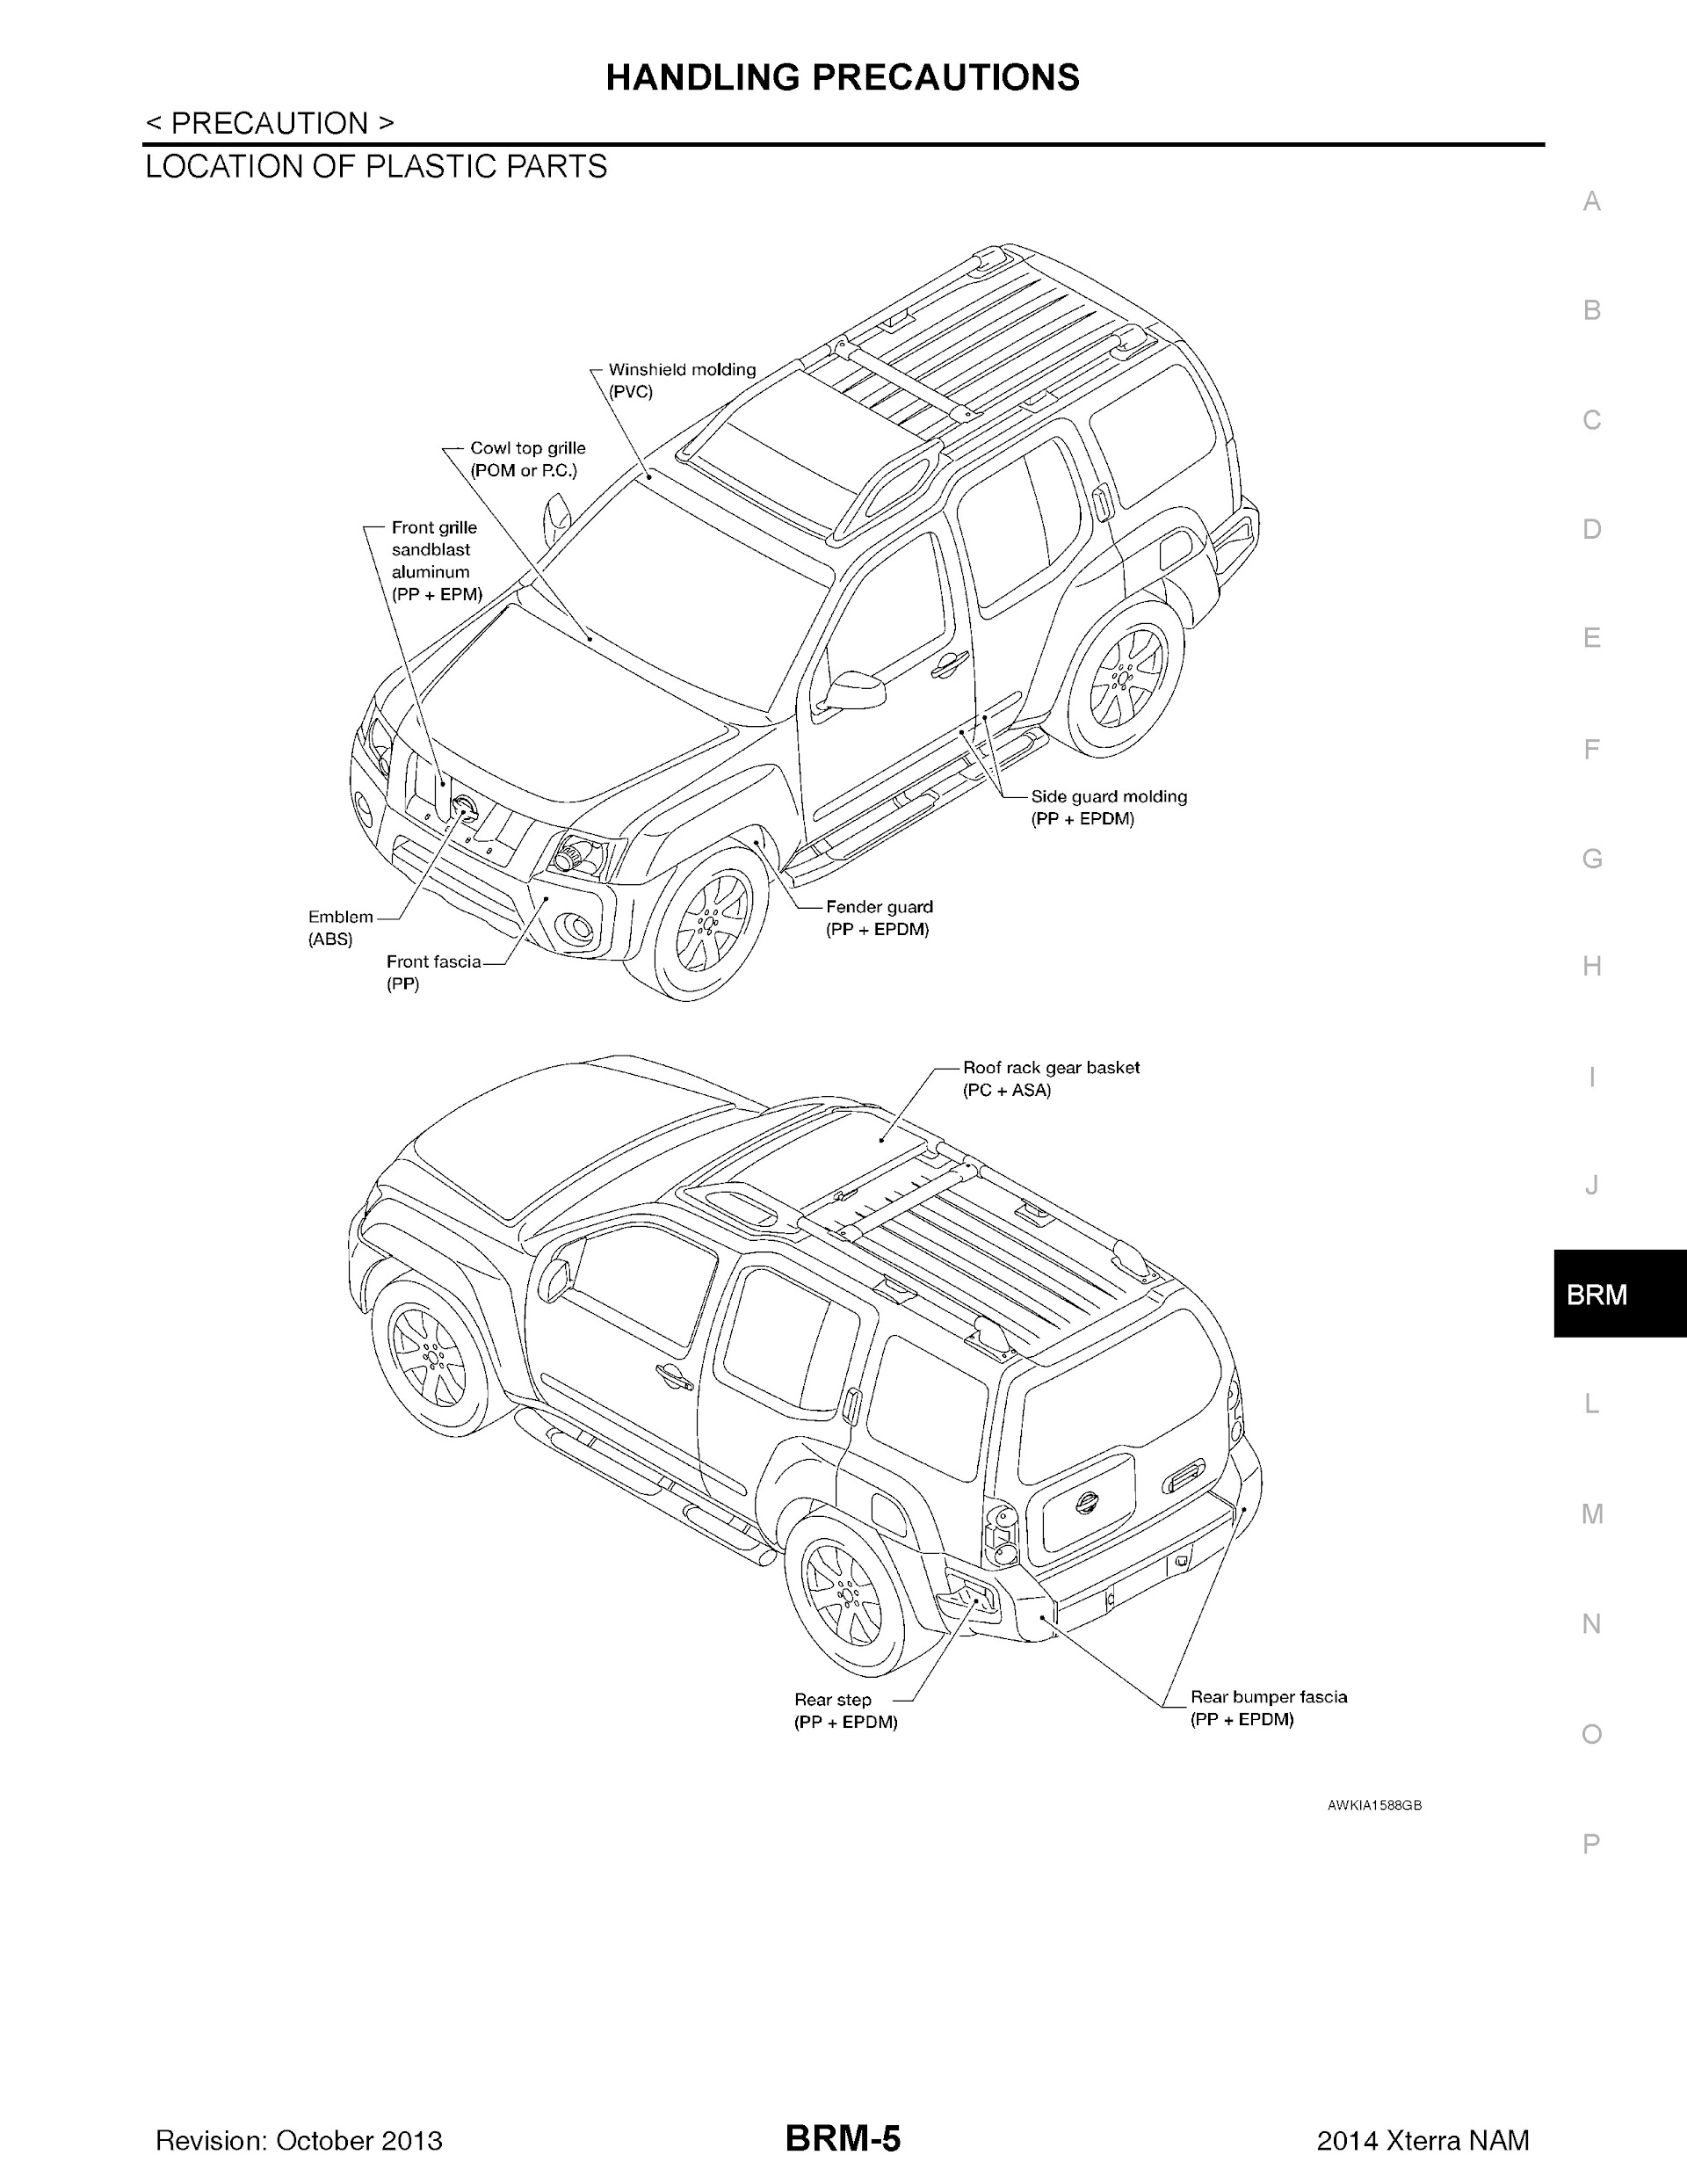 2014 Nissan Xterra Repair Manual, Location of Parts